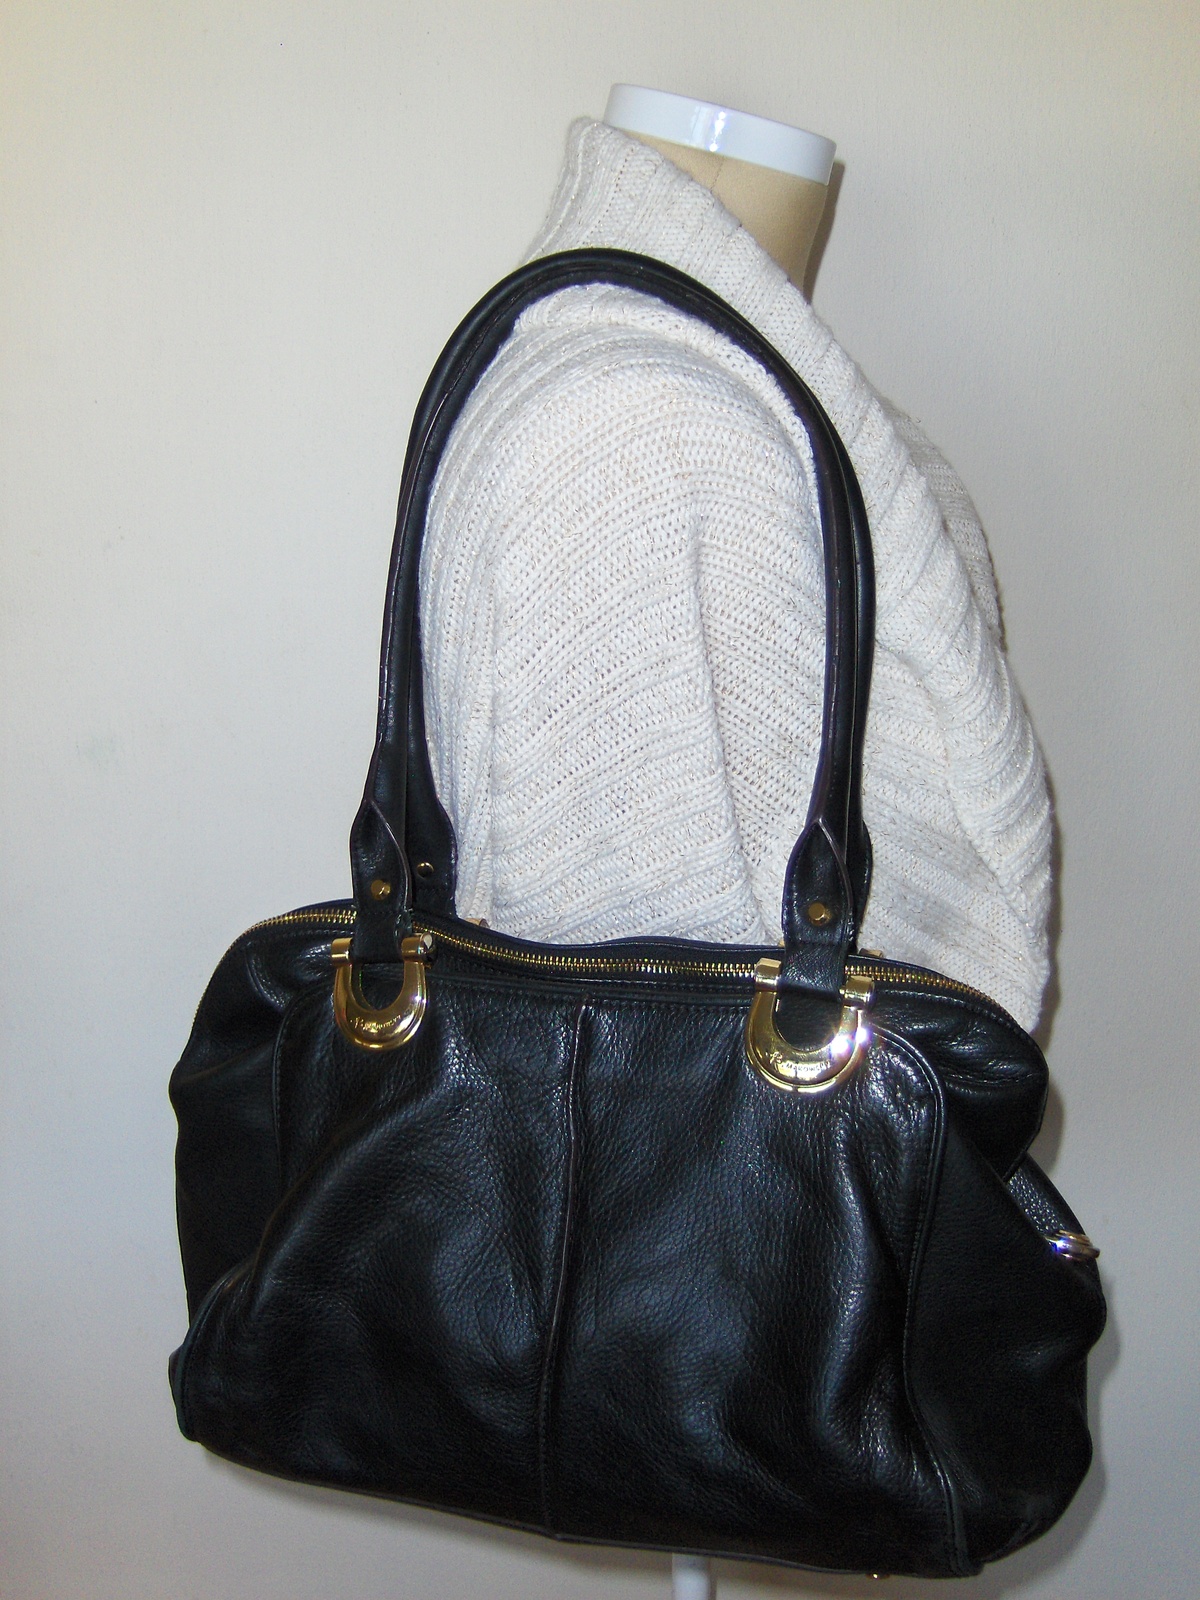 B. Makowsky Black Satchel Pebble Grain Leather Purse Shoulder Bag Tote ...